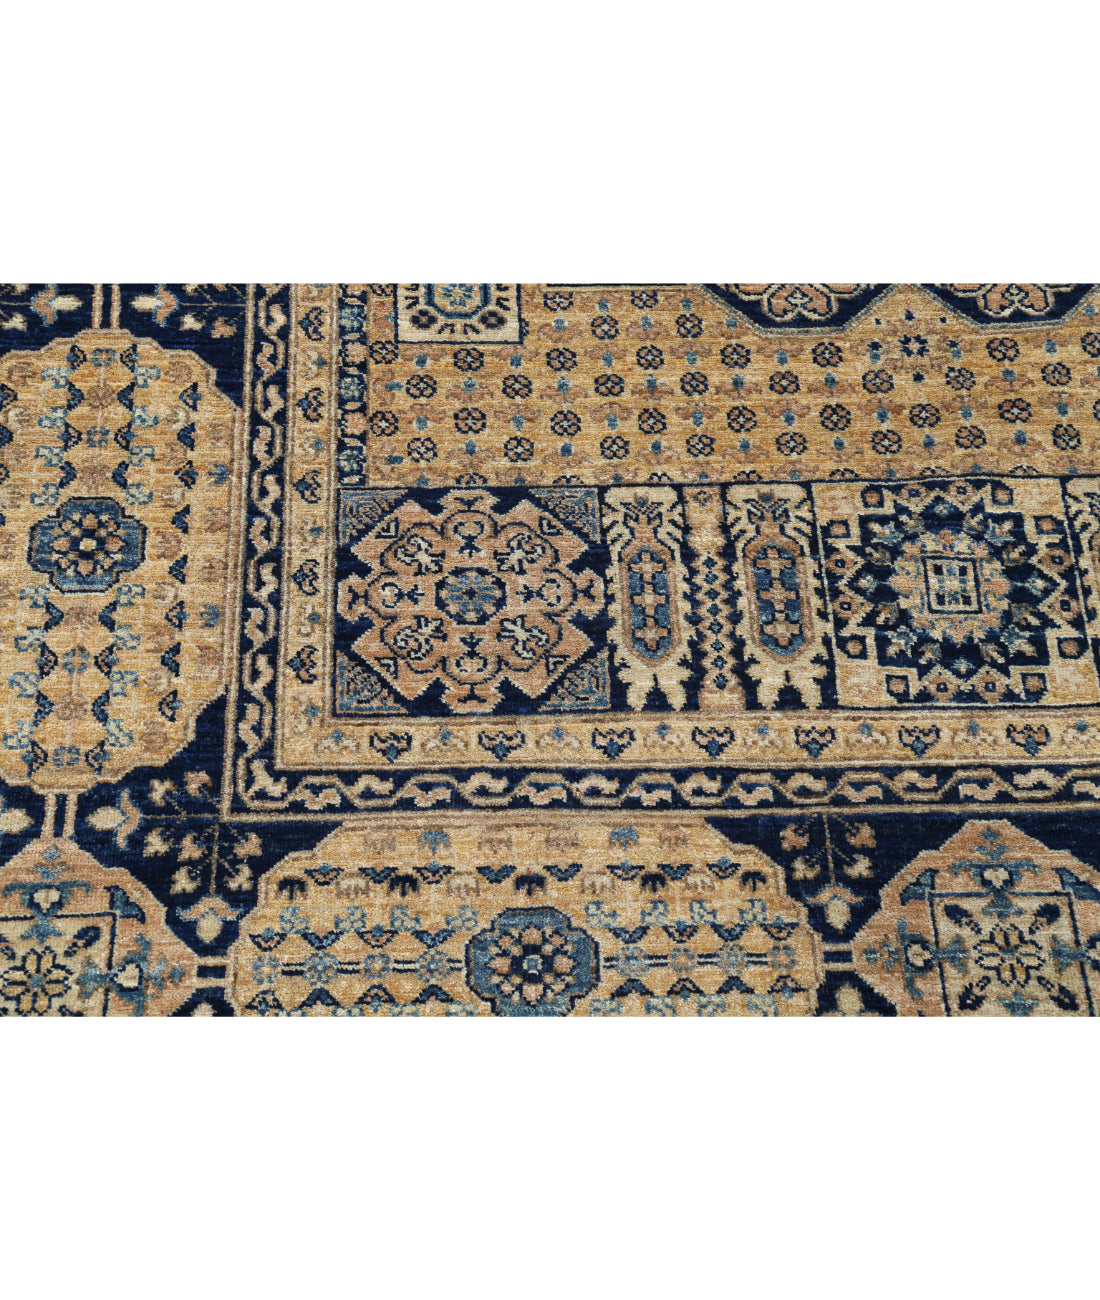 Hand Knotted Mamluk Wool Rug - 6'7'' x 9'3'' 6'7'' x 9'3'' (198 X 278) / Tan / Blue